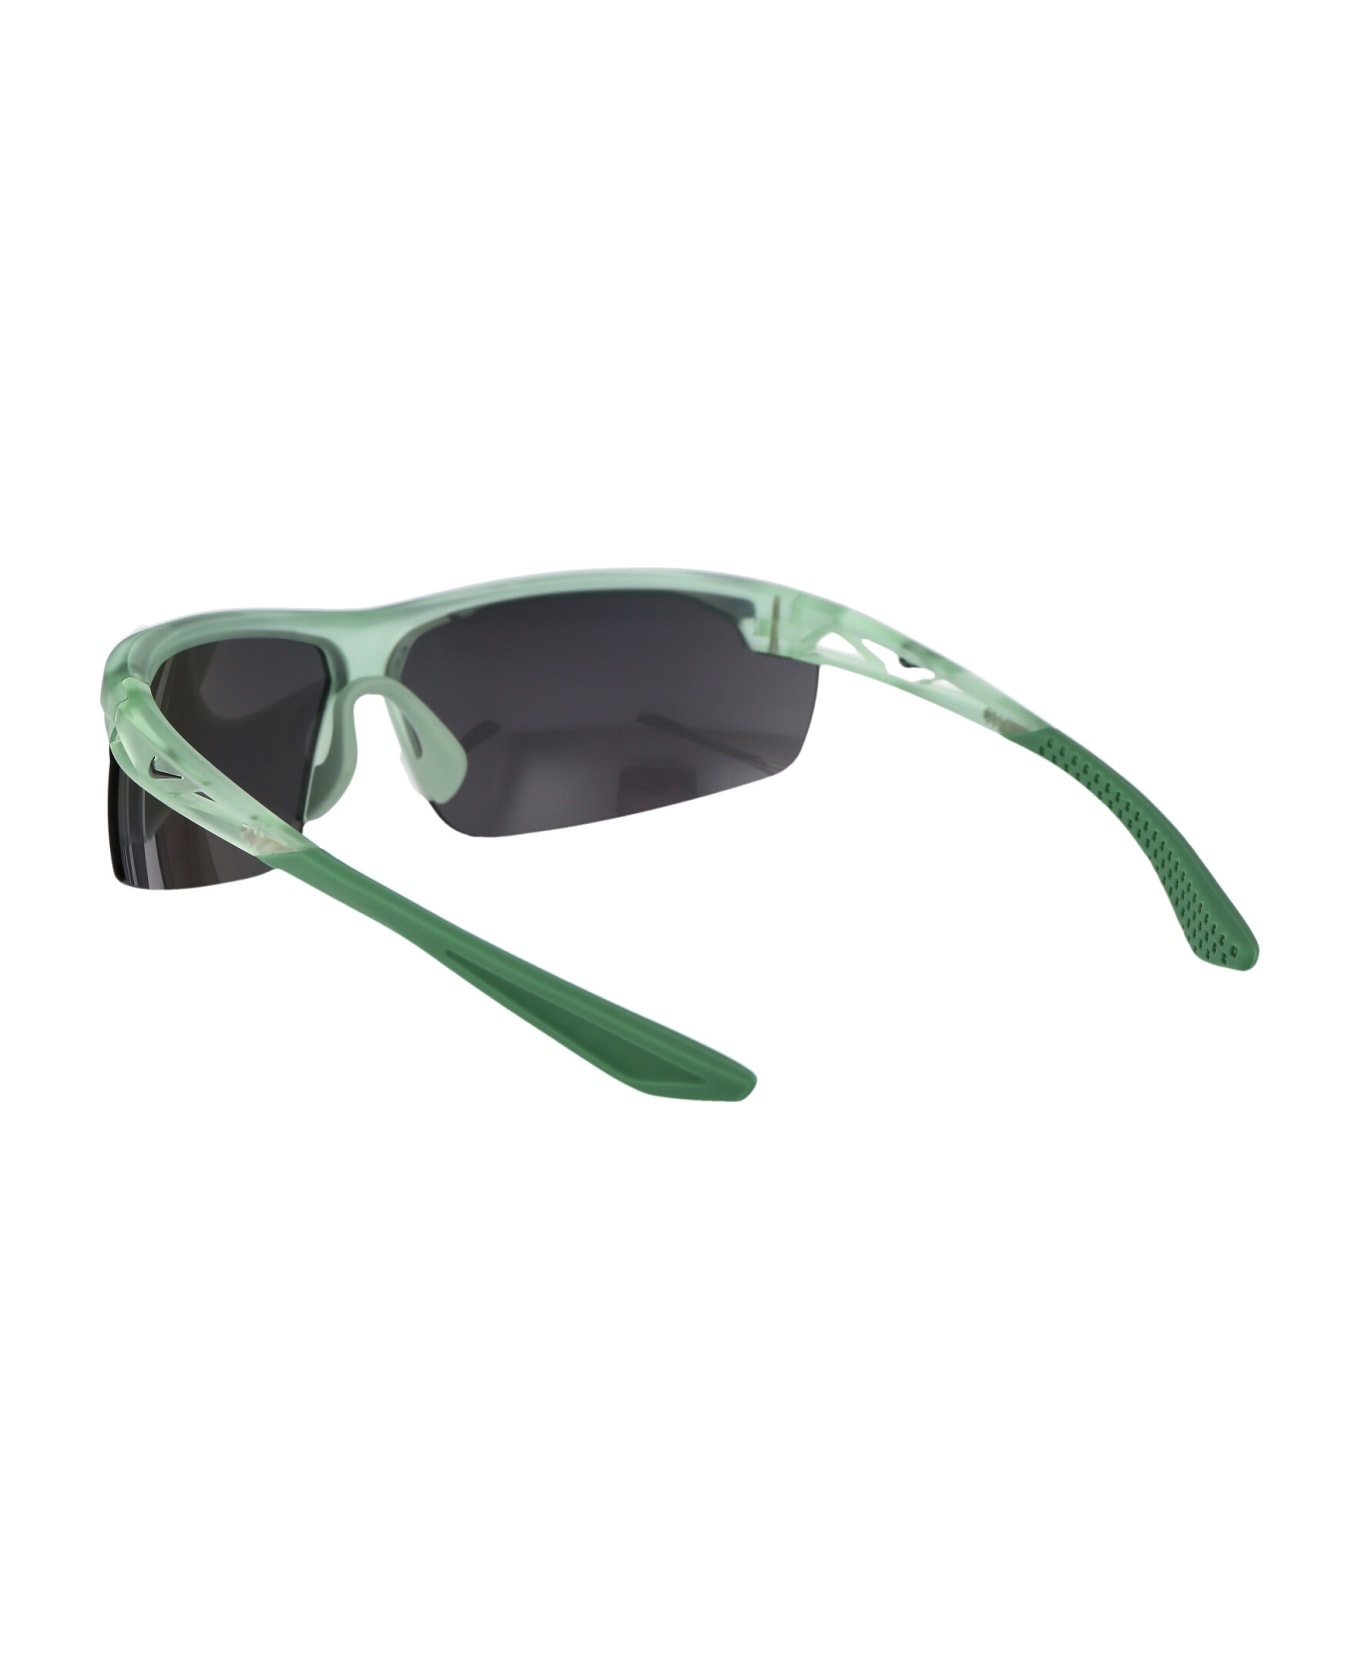 Nike Windtrack M Sunglasses - 301 SOLID GREY MIRROR MATTE JADE ICE